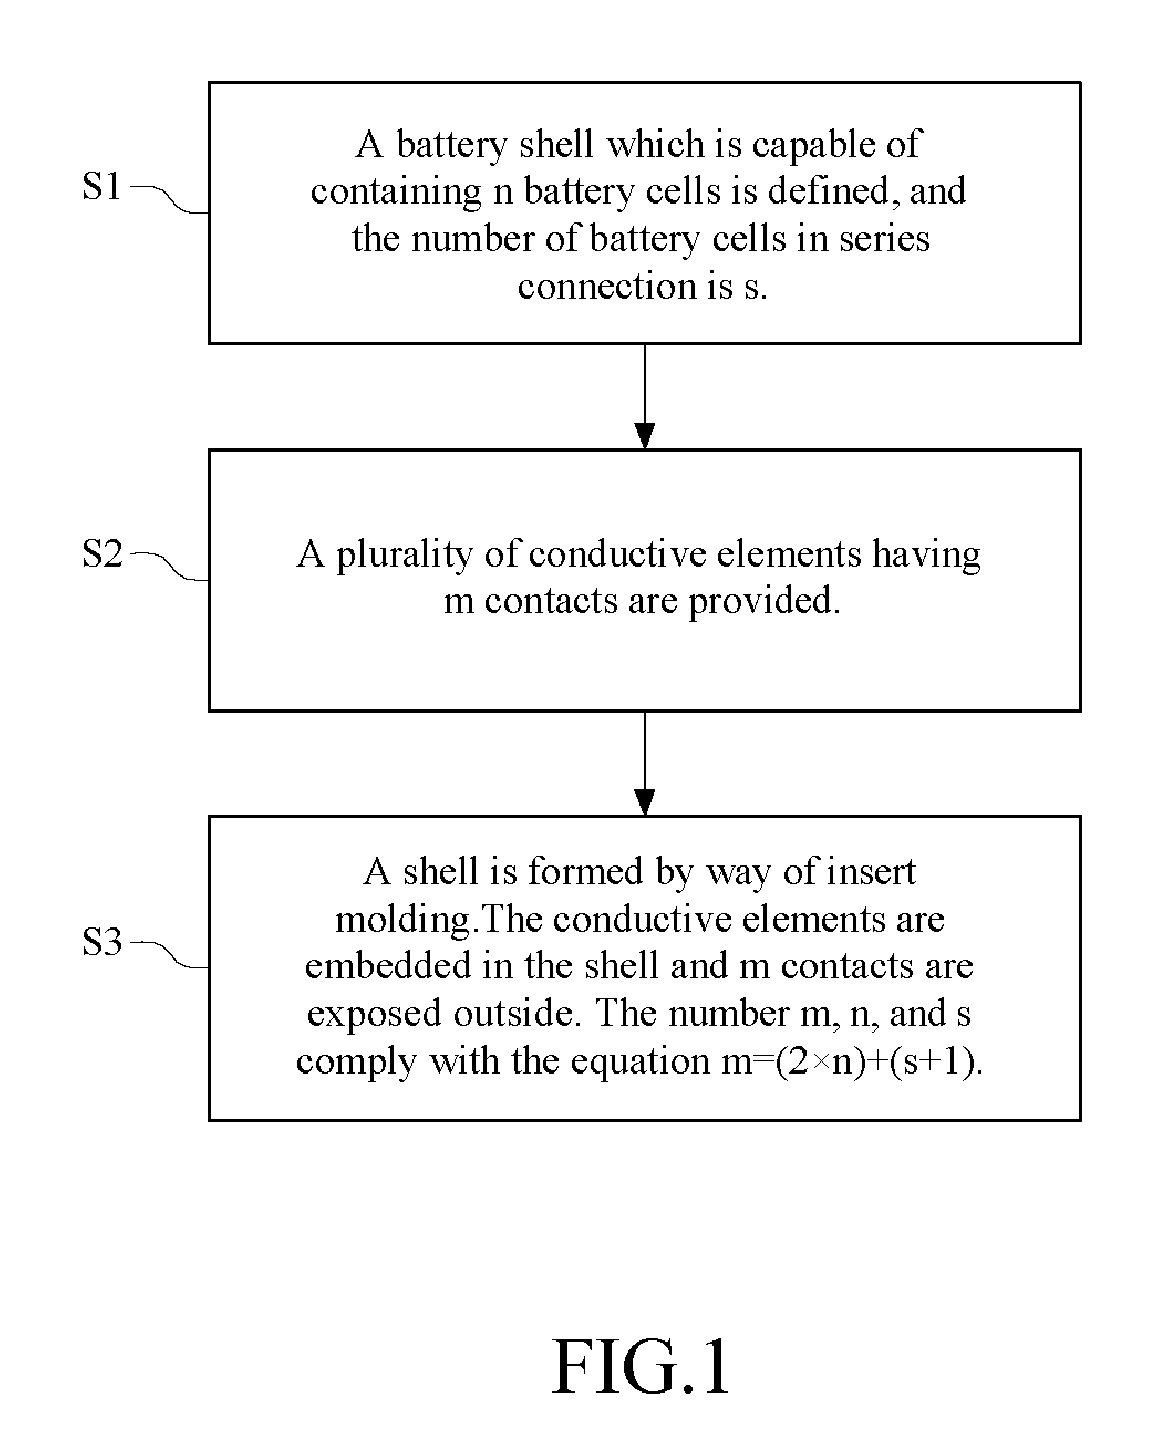 Method for fabricating battery shell